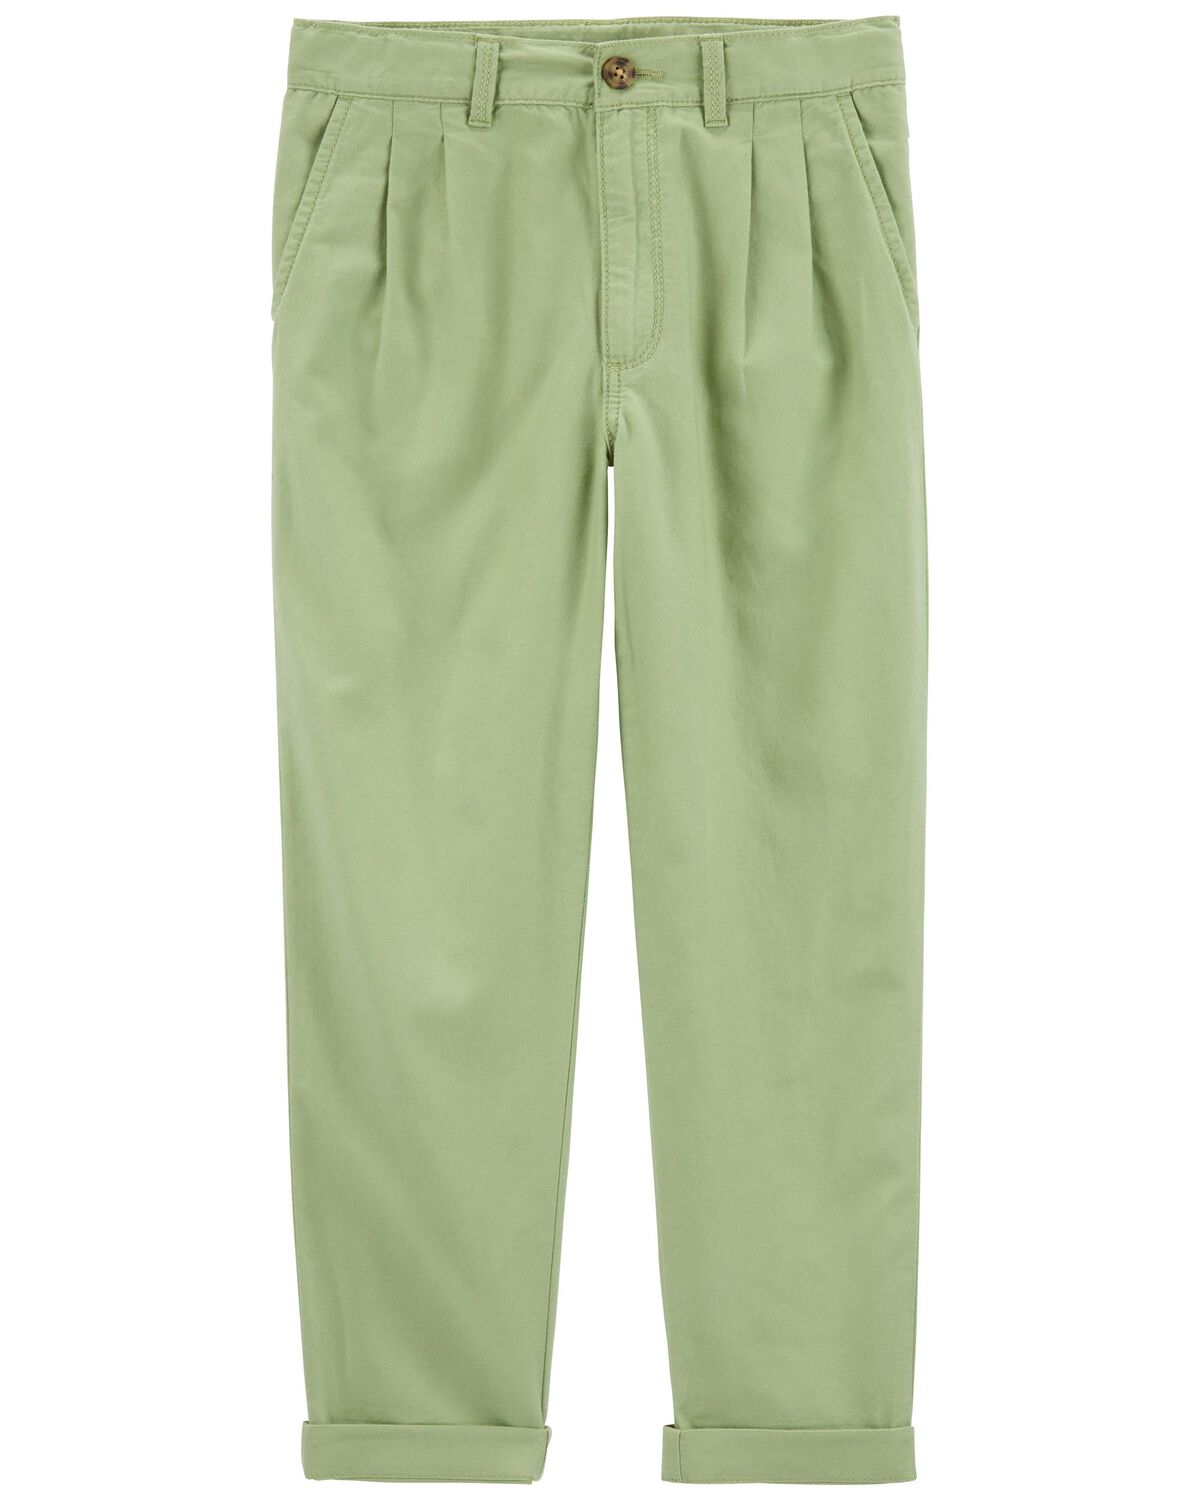 Green Kid LENZING™ ECOVERO™ Flat-Front Pants | carters.com